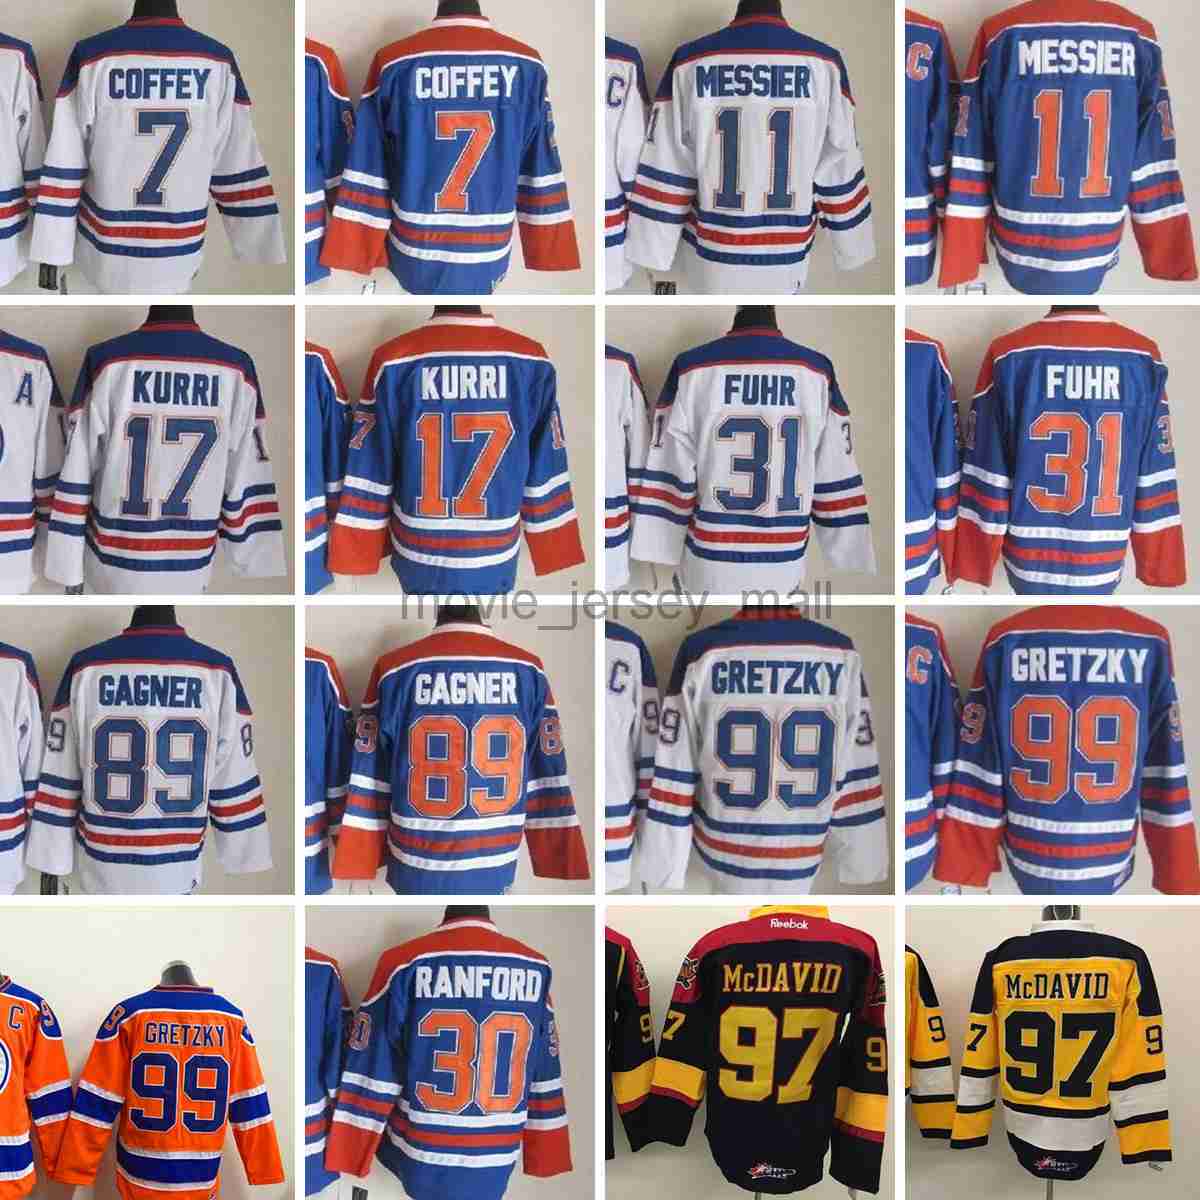 

Edmonton''Oilers''New Retro Ice Hockey Jerseys 99 Wayne Gretzky 97 Connor McDavid Paul Coffey Mark Messier Jari Kurri Bill Ranford Grant Fuhr 89 Gagner, Same as picture (with team name)